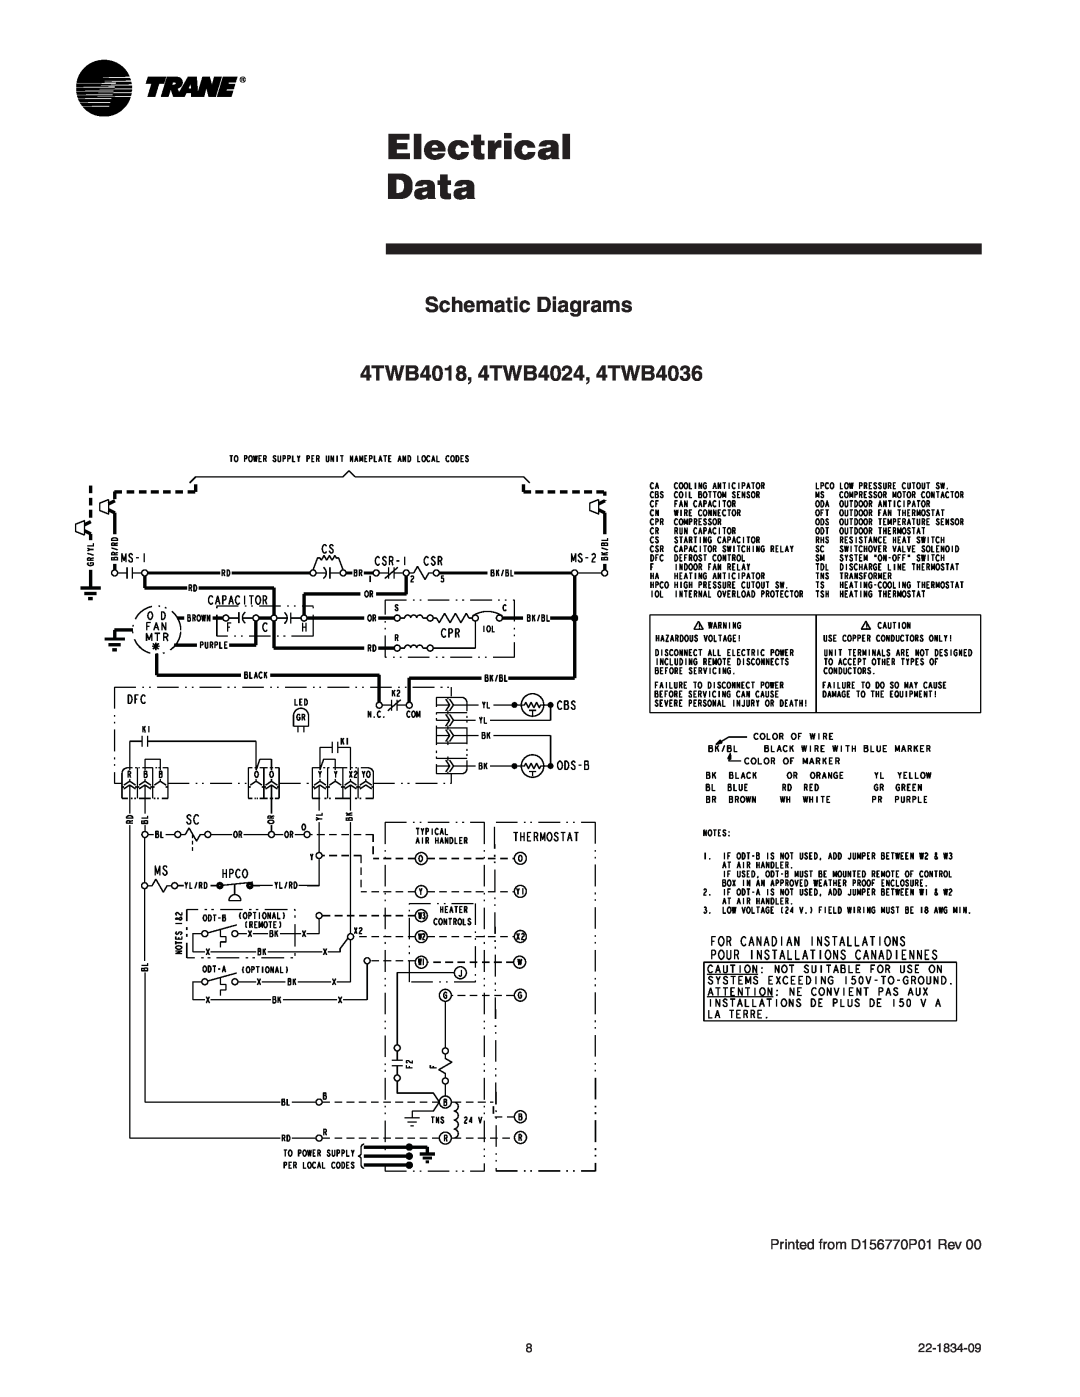 Trane manual Electrical Data, Schematic Diagrams 4TWB4018, 4TWB4024, 4TWB4036, Printed from D156770P01 Rev 